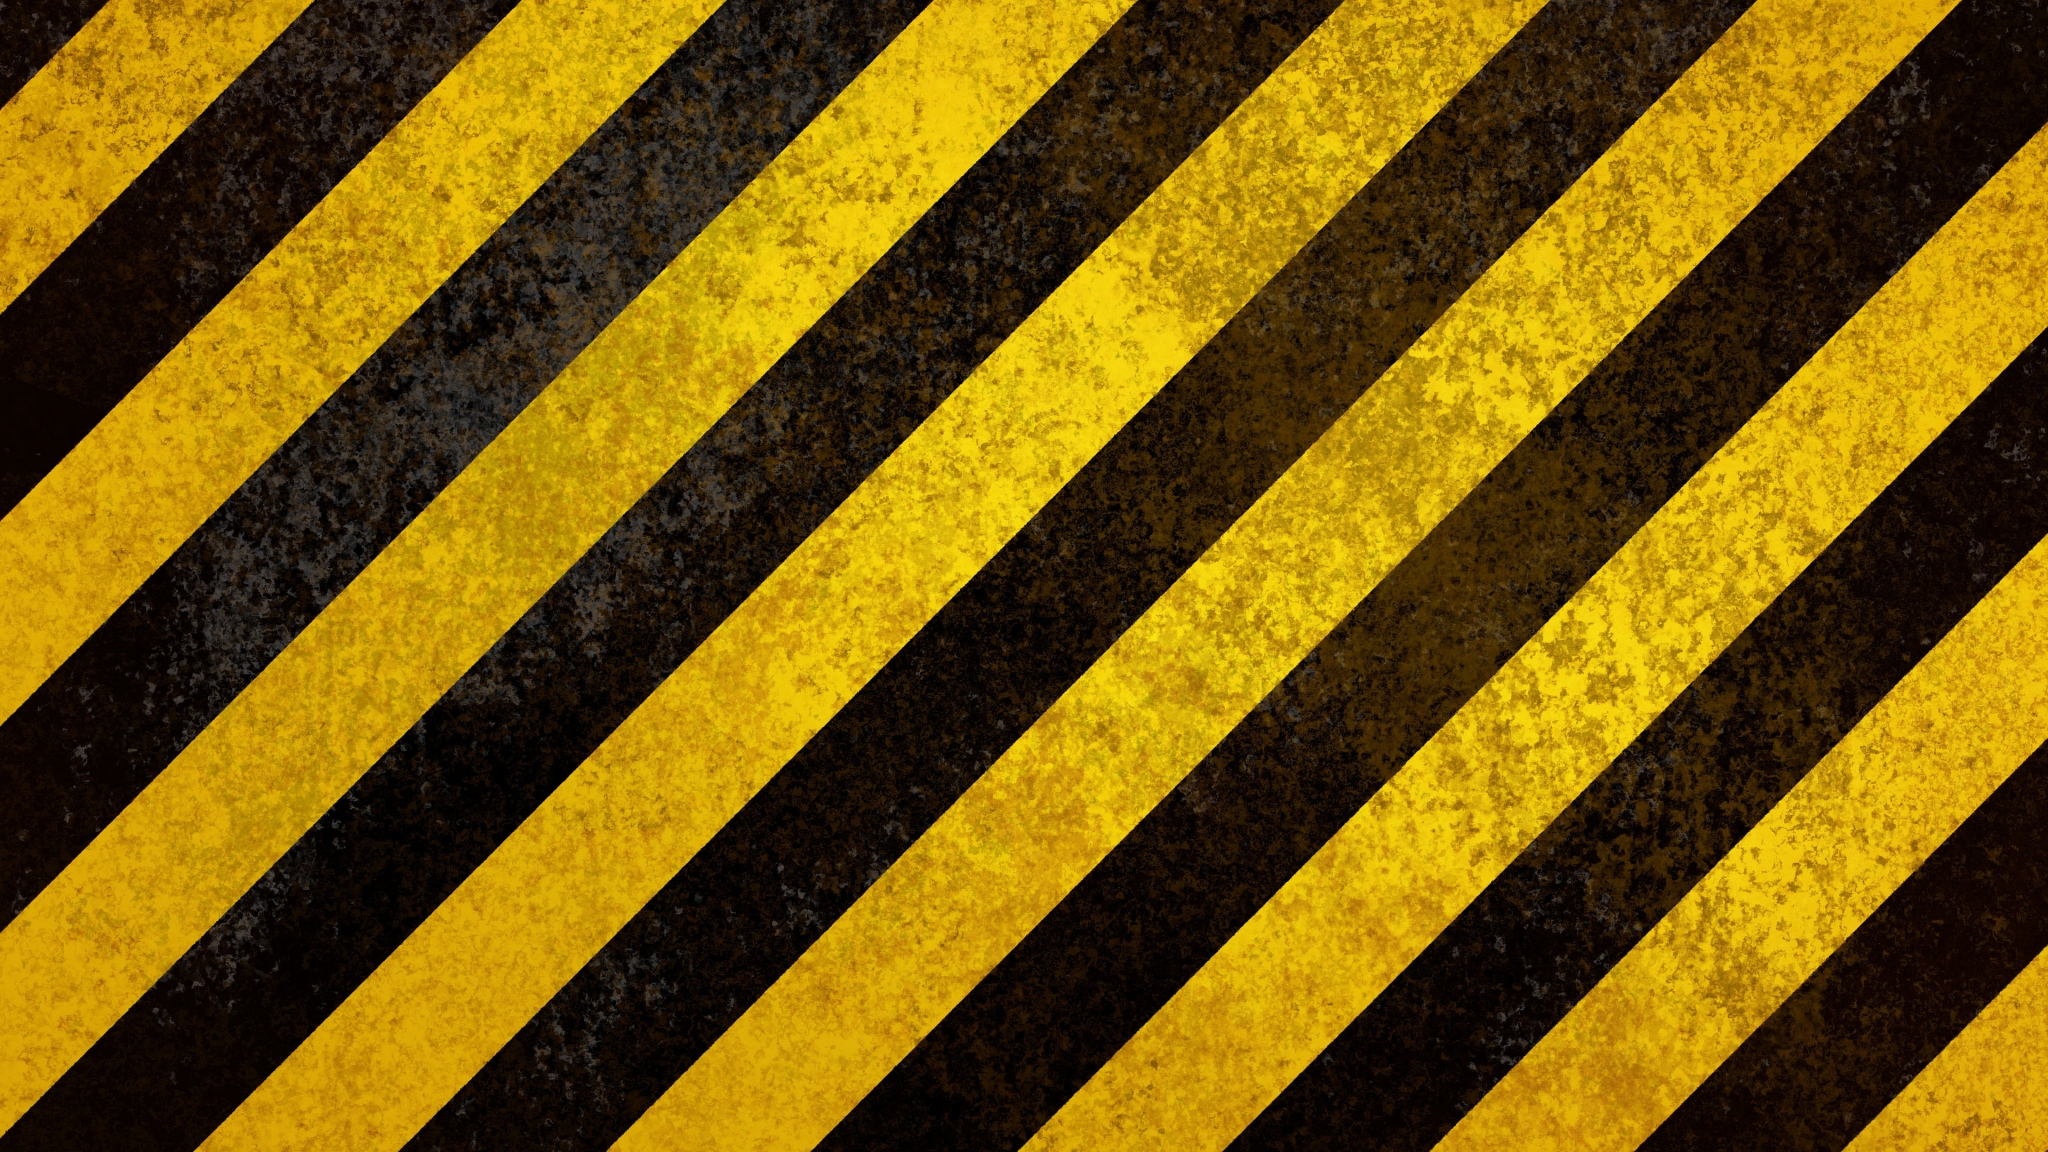 Download wallpaper 2048x1152 yellow stripes, texture, digital art, dual  wide 2048x1152 hd background, 5708